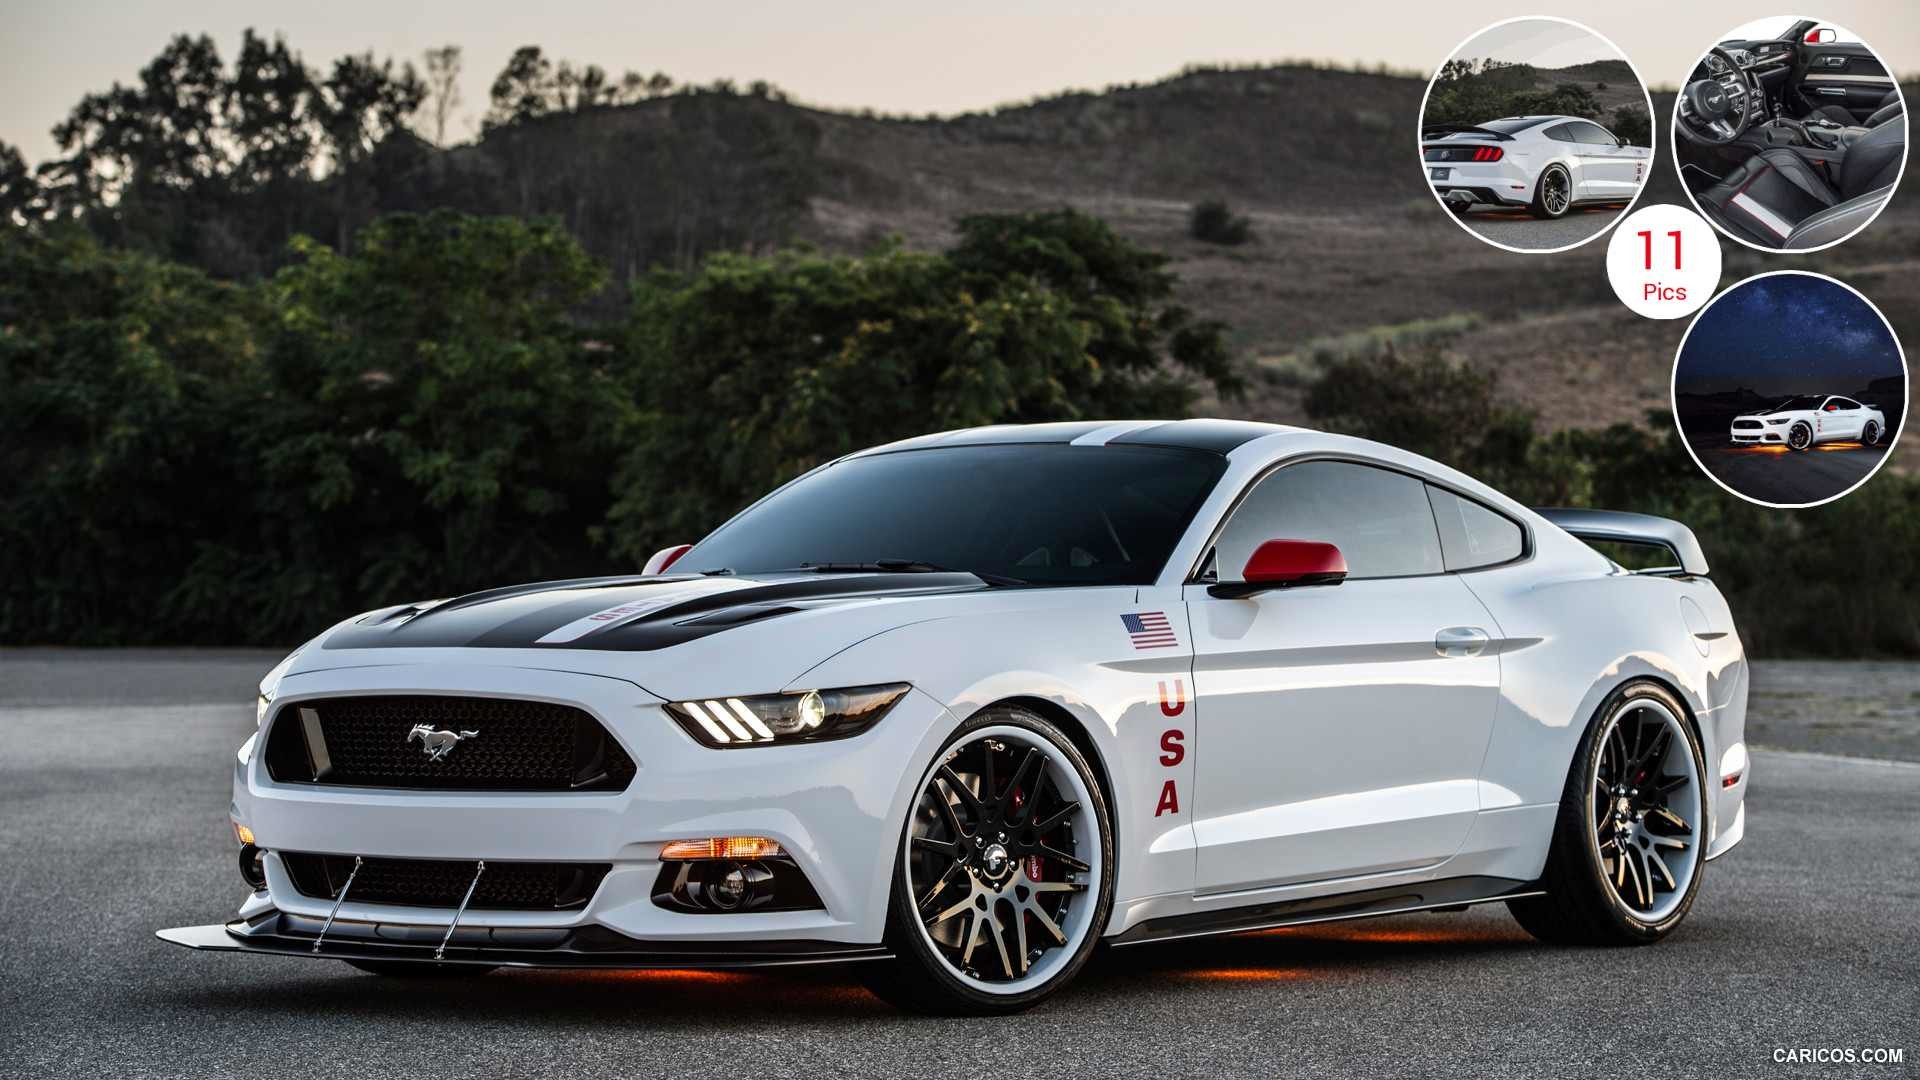 2015 Ford Mustang Apollo Edition Caricos.com